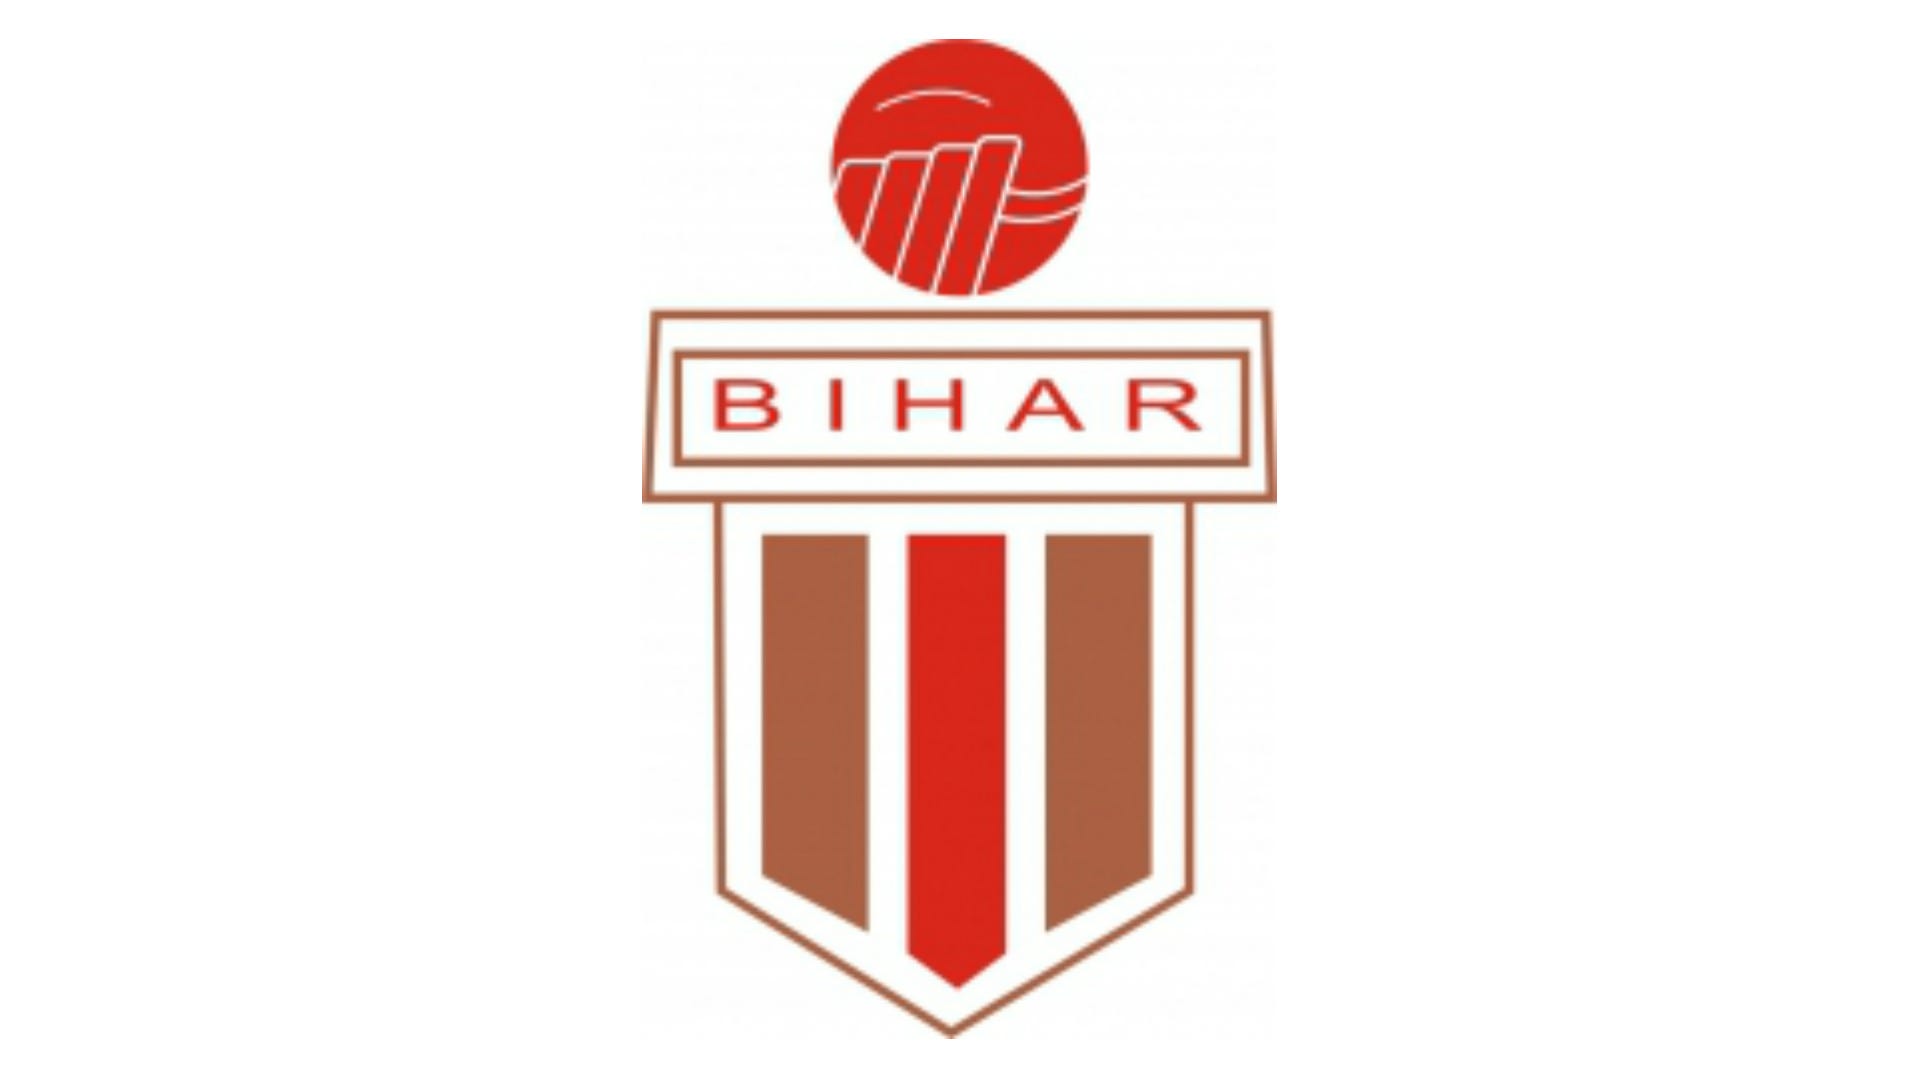 The Stars Of Bihar Company Profile, information, investors, valuation &  Funding